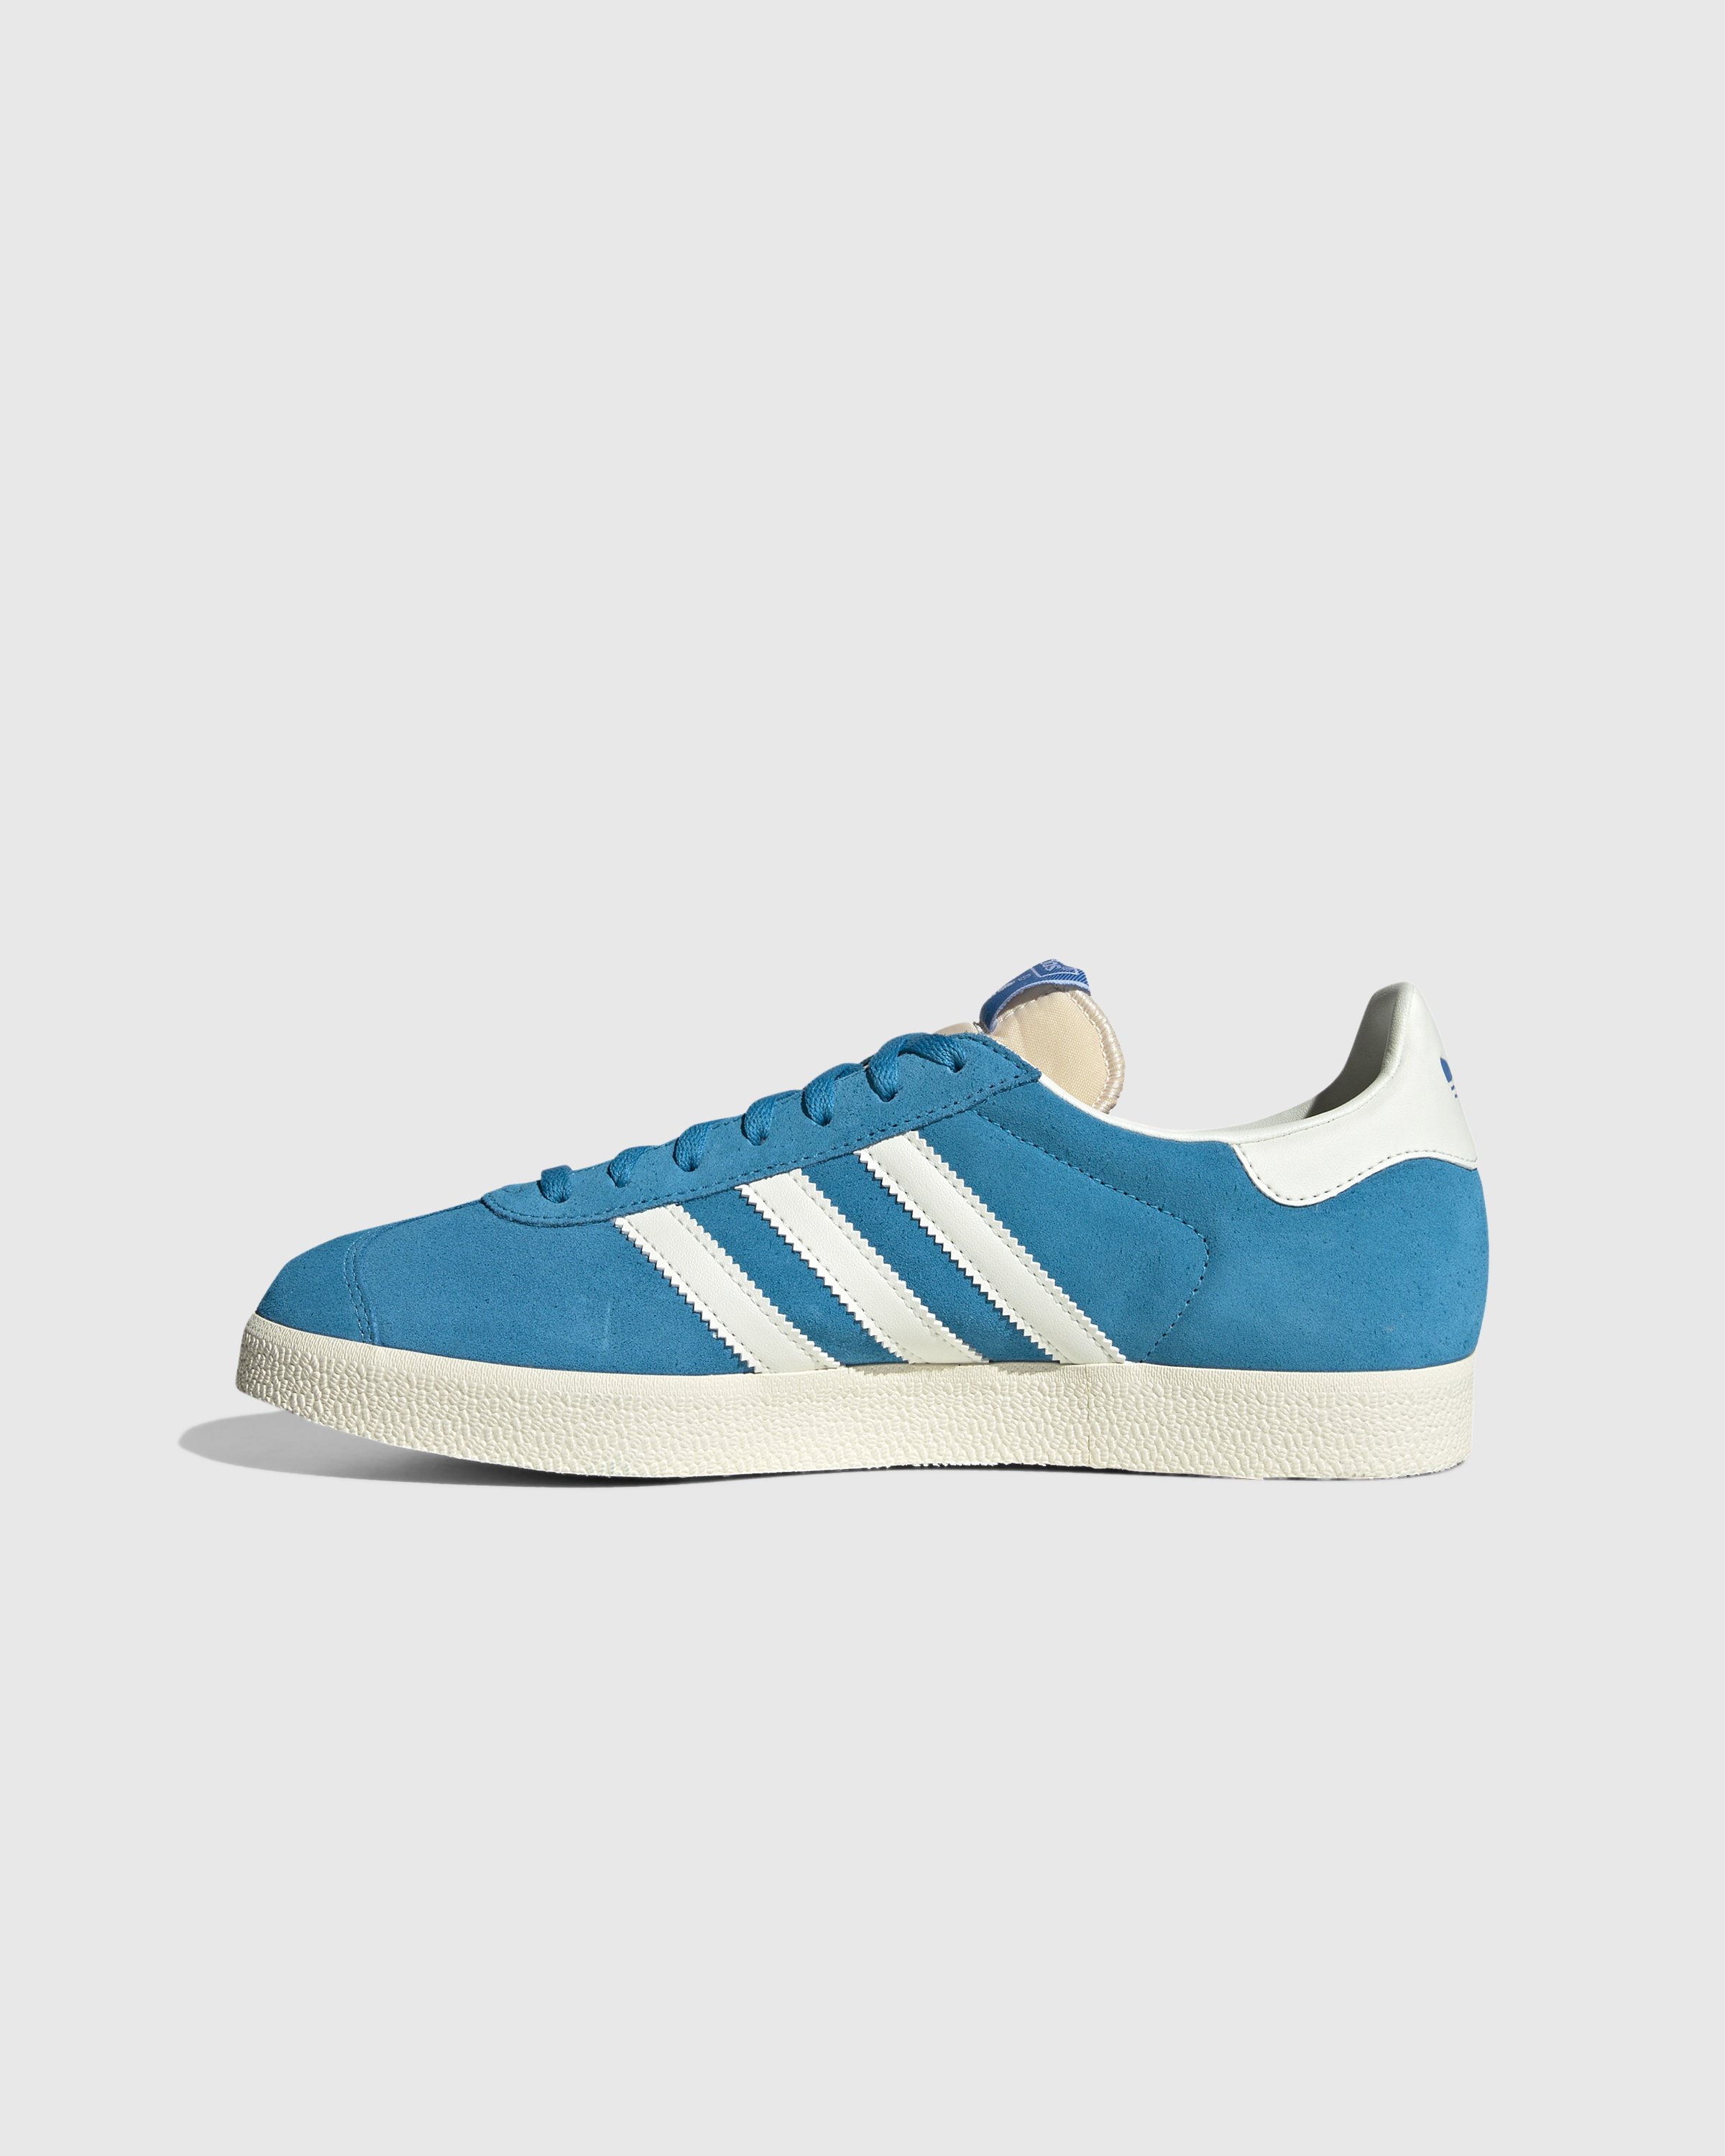 Adidas - Gazelle Aqua/White - Footwear - Blue - Image 2